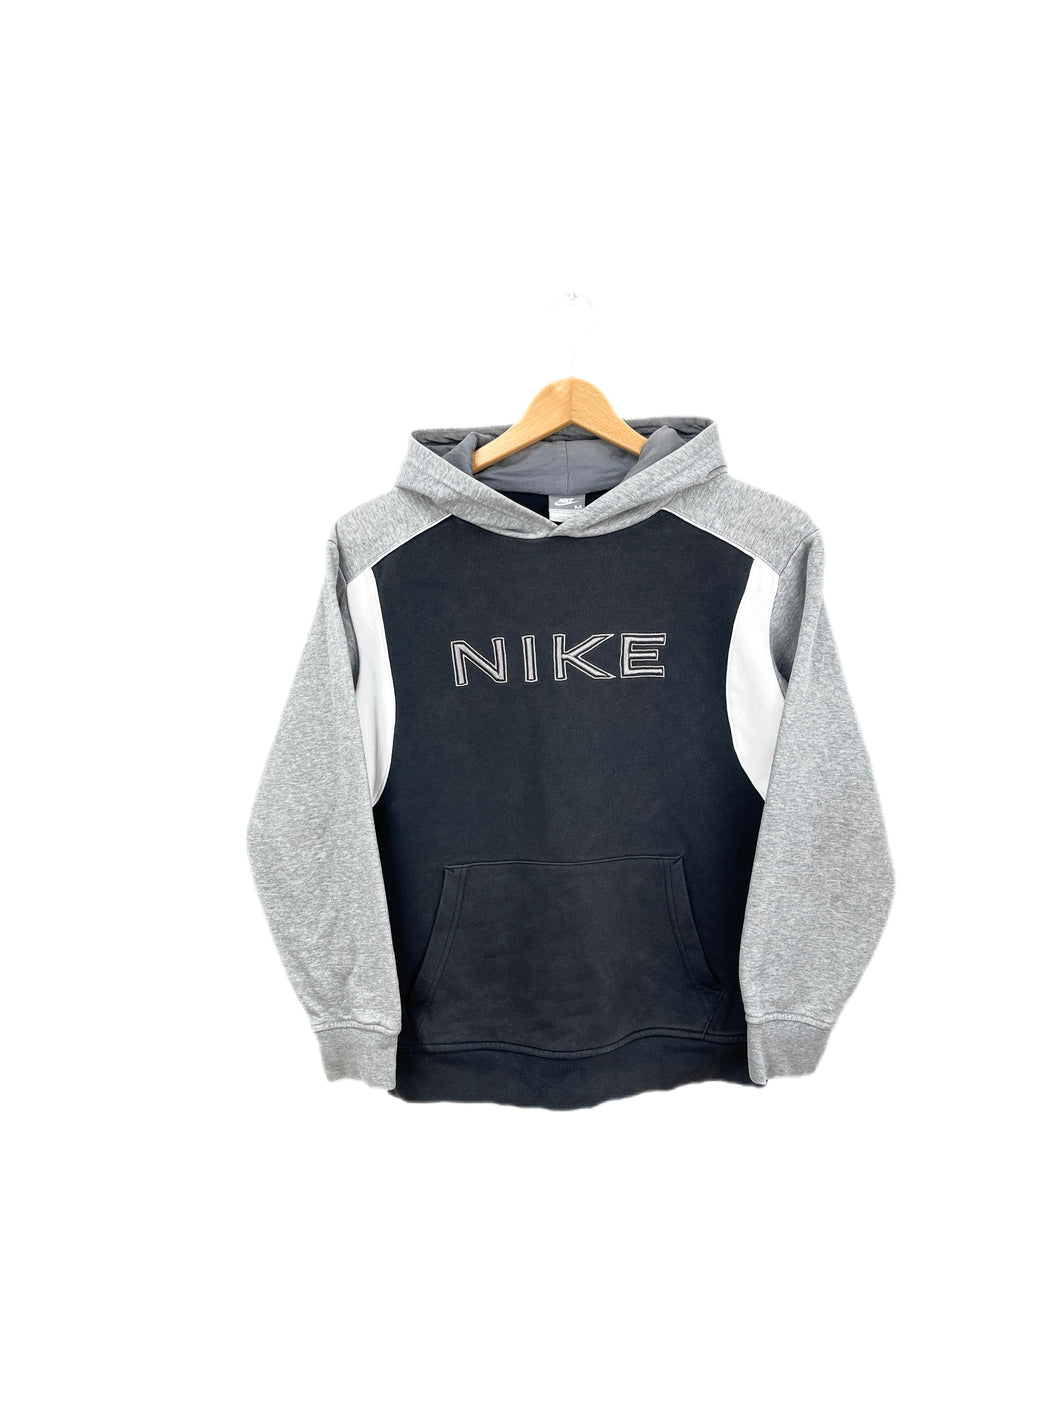 Nike Sweatshirt - XXSmall